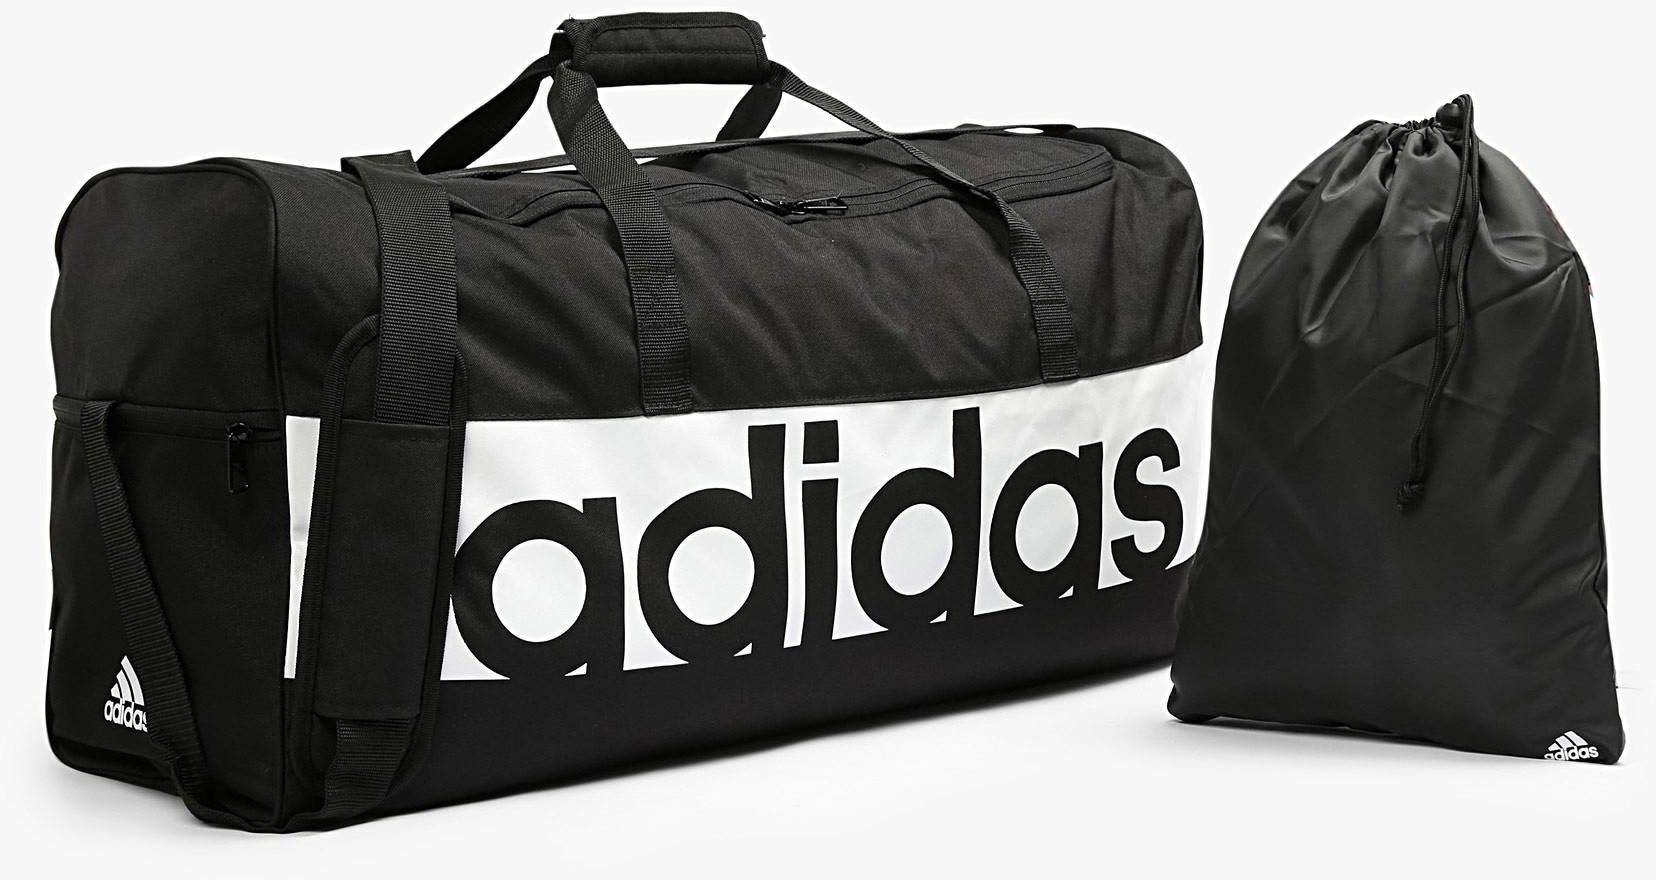 Black Linear Performance Duffle Bag - Large